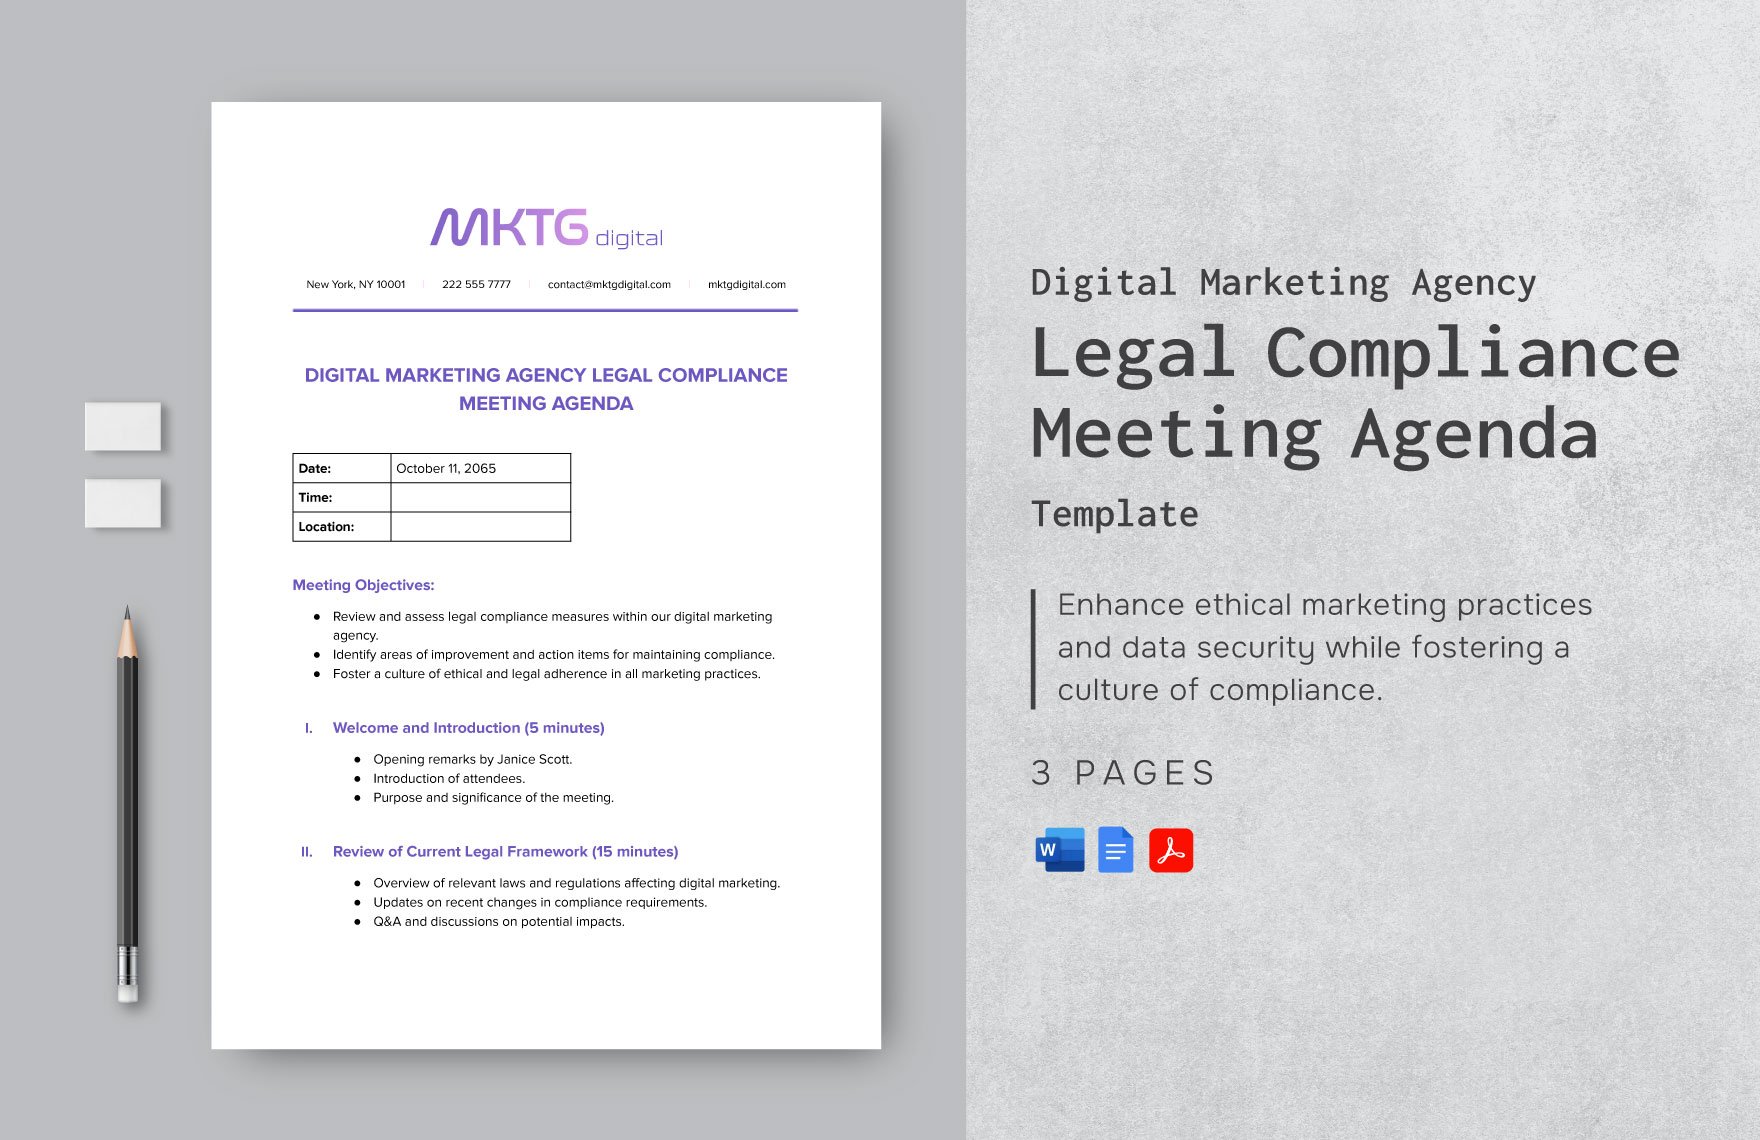 Digital Marketing Agency Legal Compliance Meeting Agenda Template